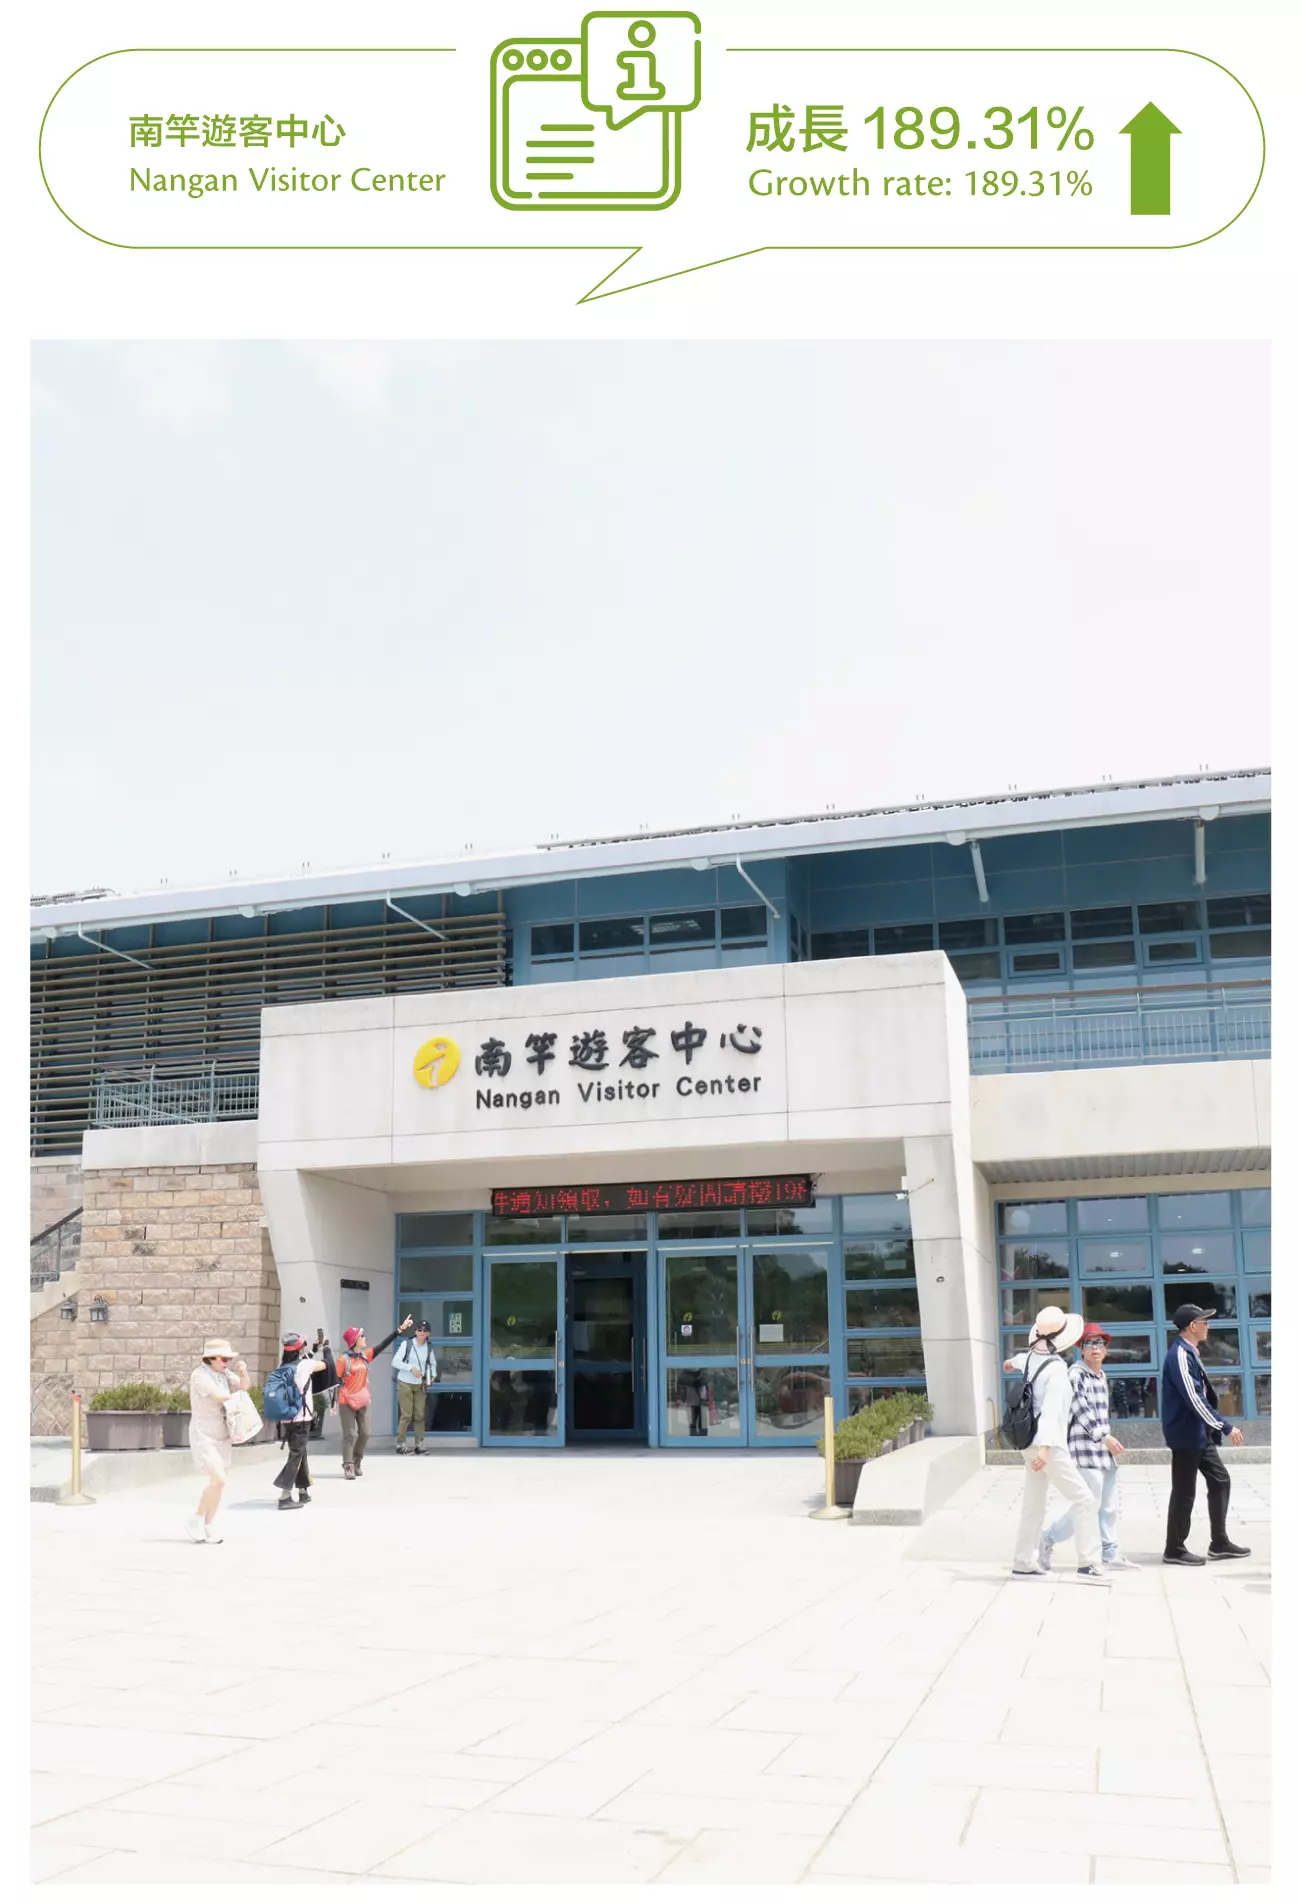 Nangan Visitor Center, Growth rate: 189.31%